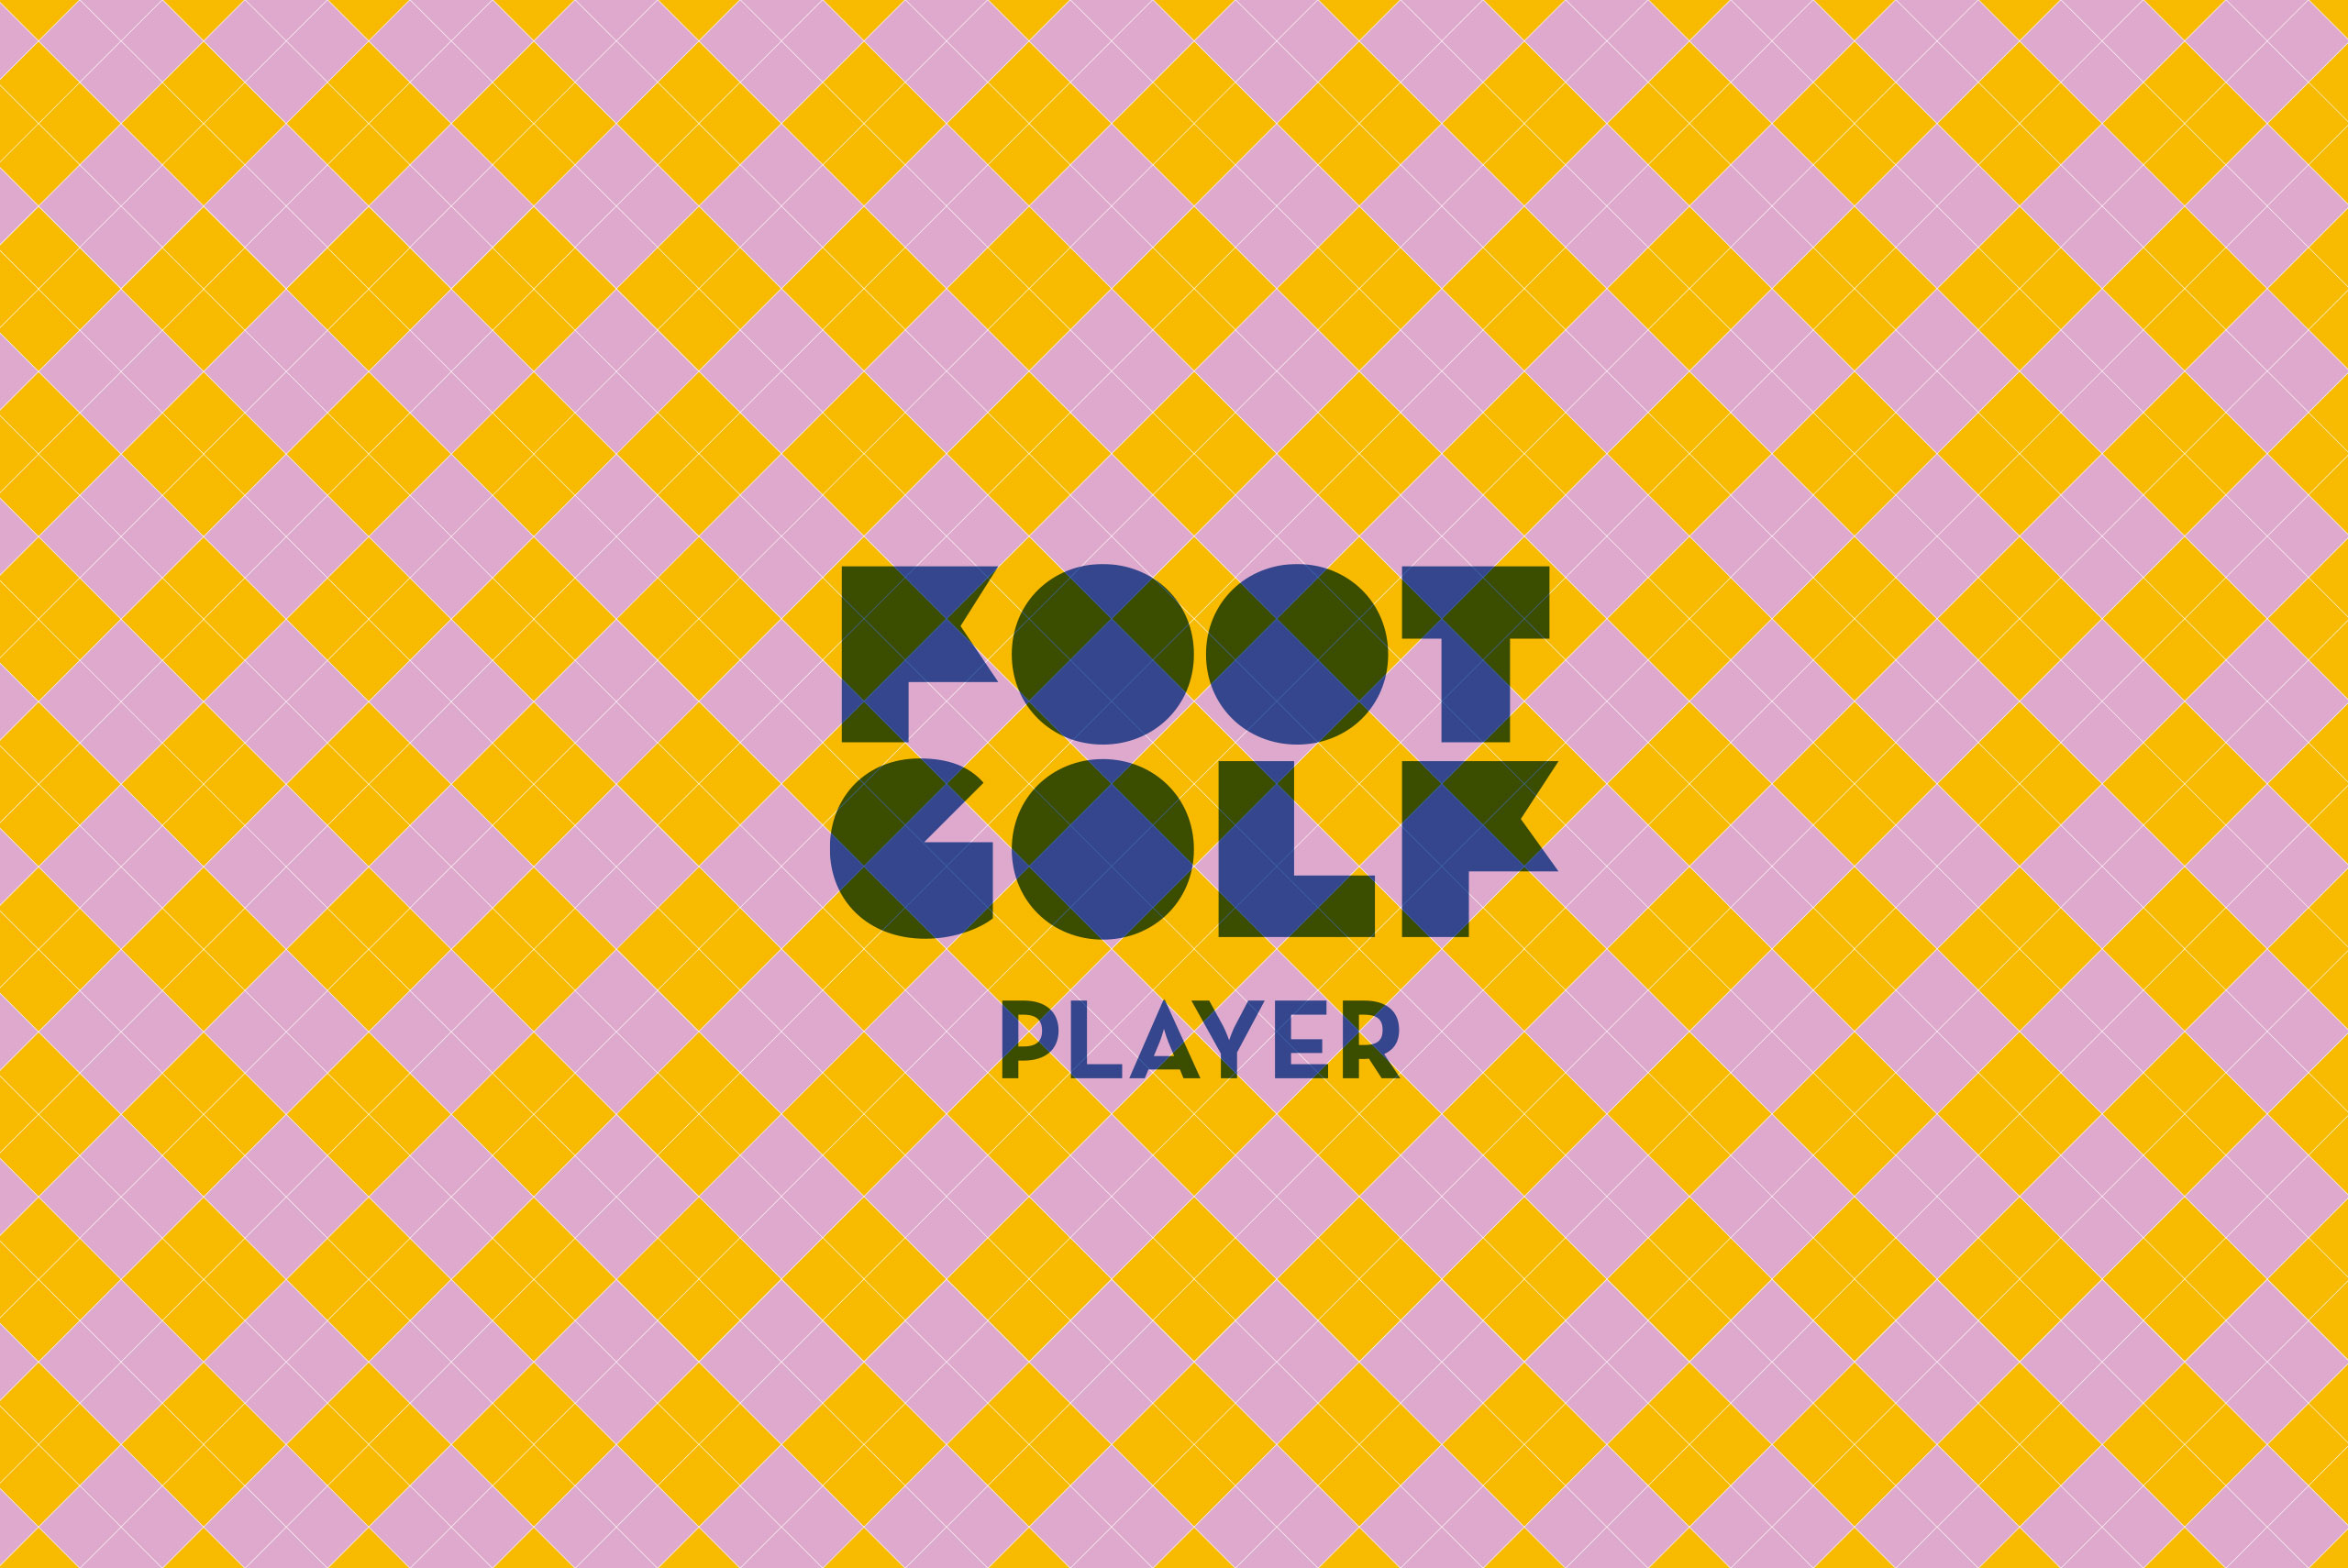 design logo footgolf